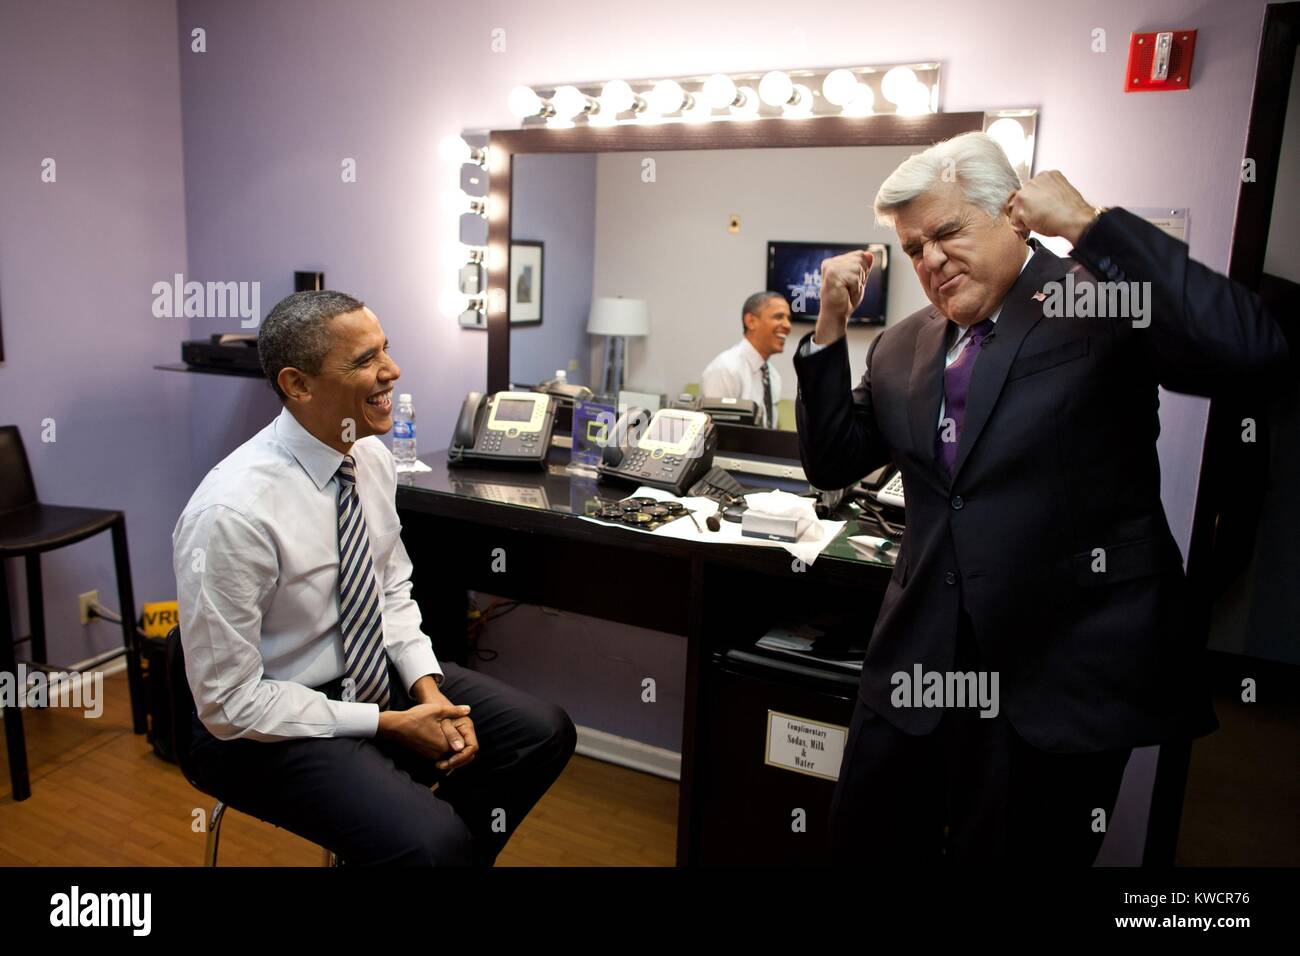 President Barack Obama and Jay Leno joke backstage at NBC Studios in Burbank, Calif. Oct. 25, 2011. (BSLOC 2015 3 108) Stock Photo